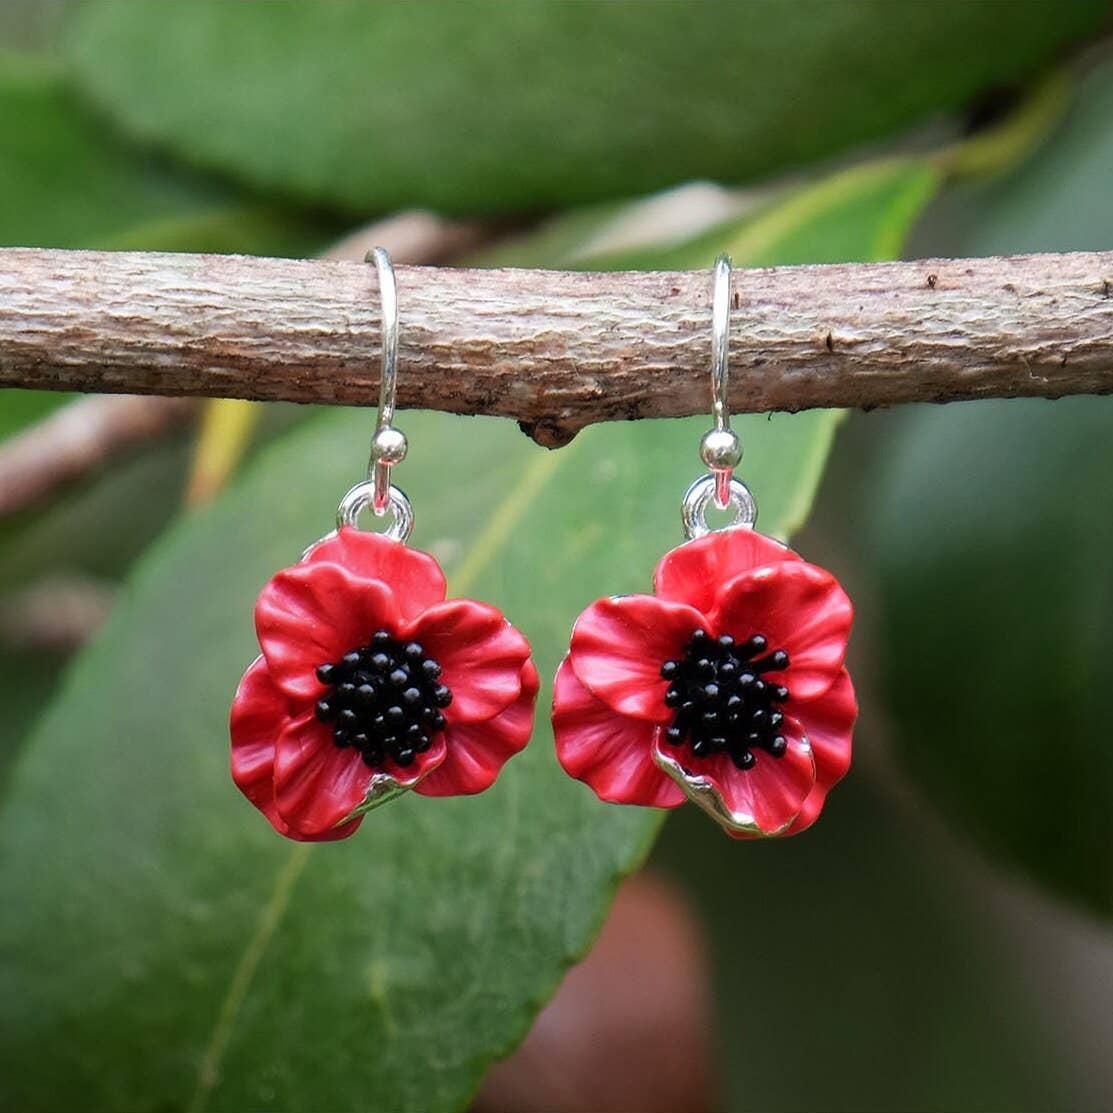 Red Flower Drop Hook Earrings